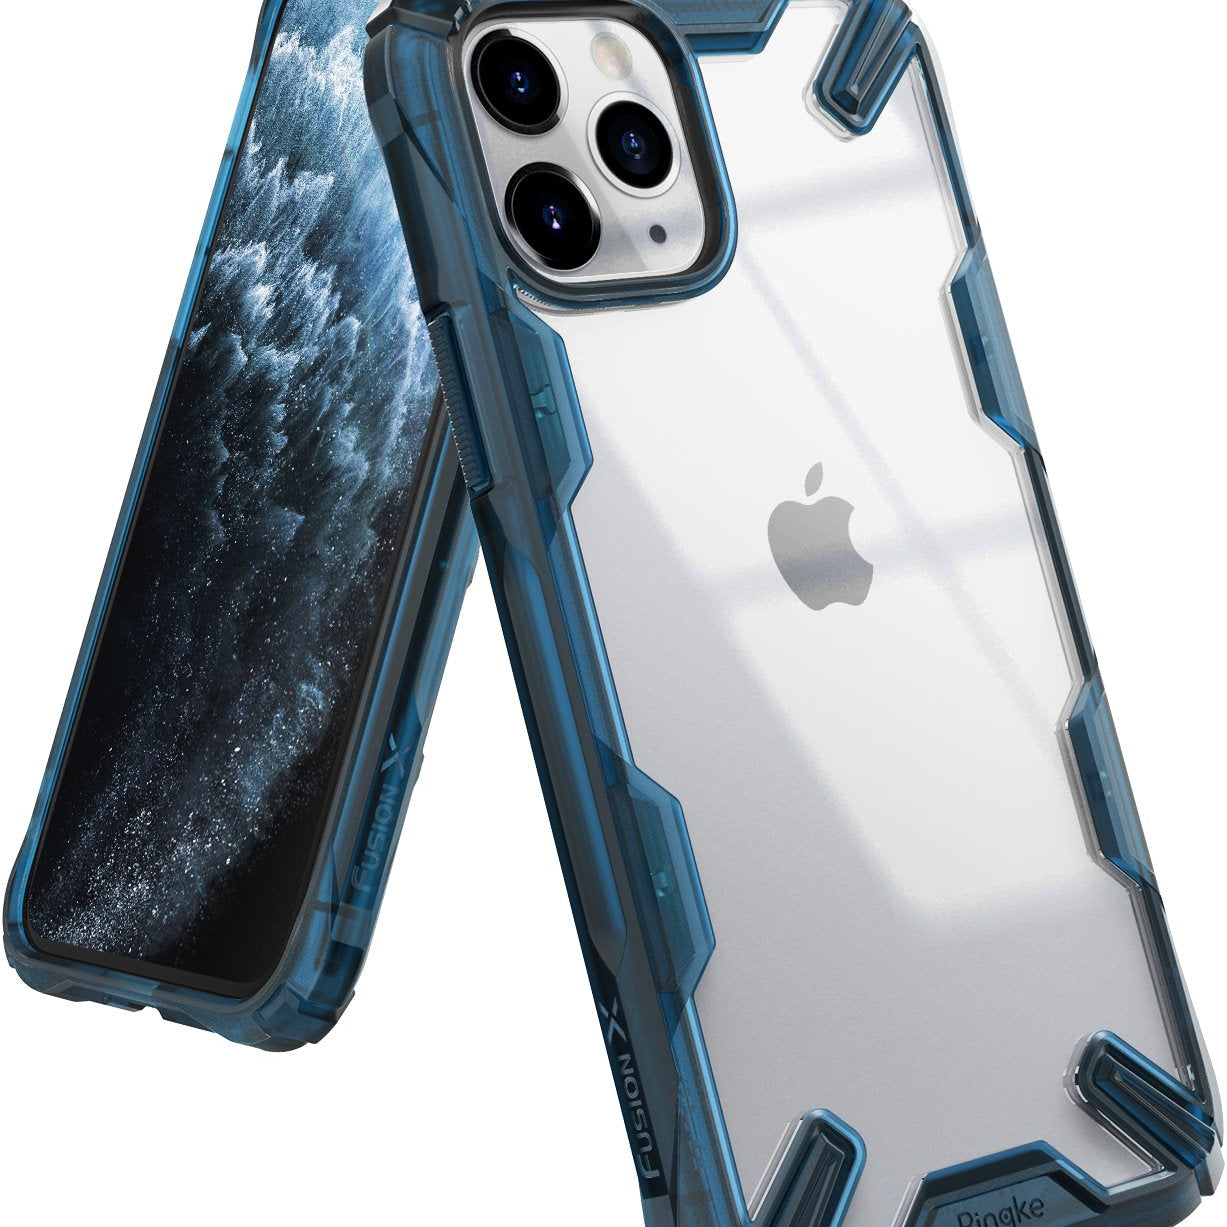 iPhone 11 Pro Case Fusion-X space blue color main image